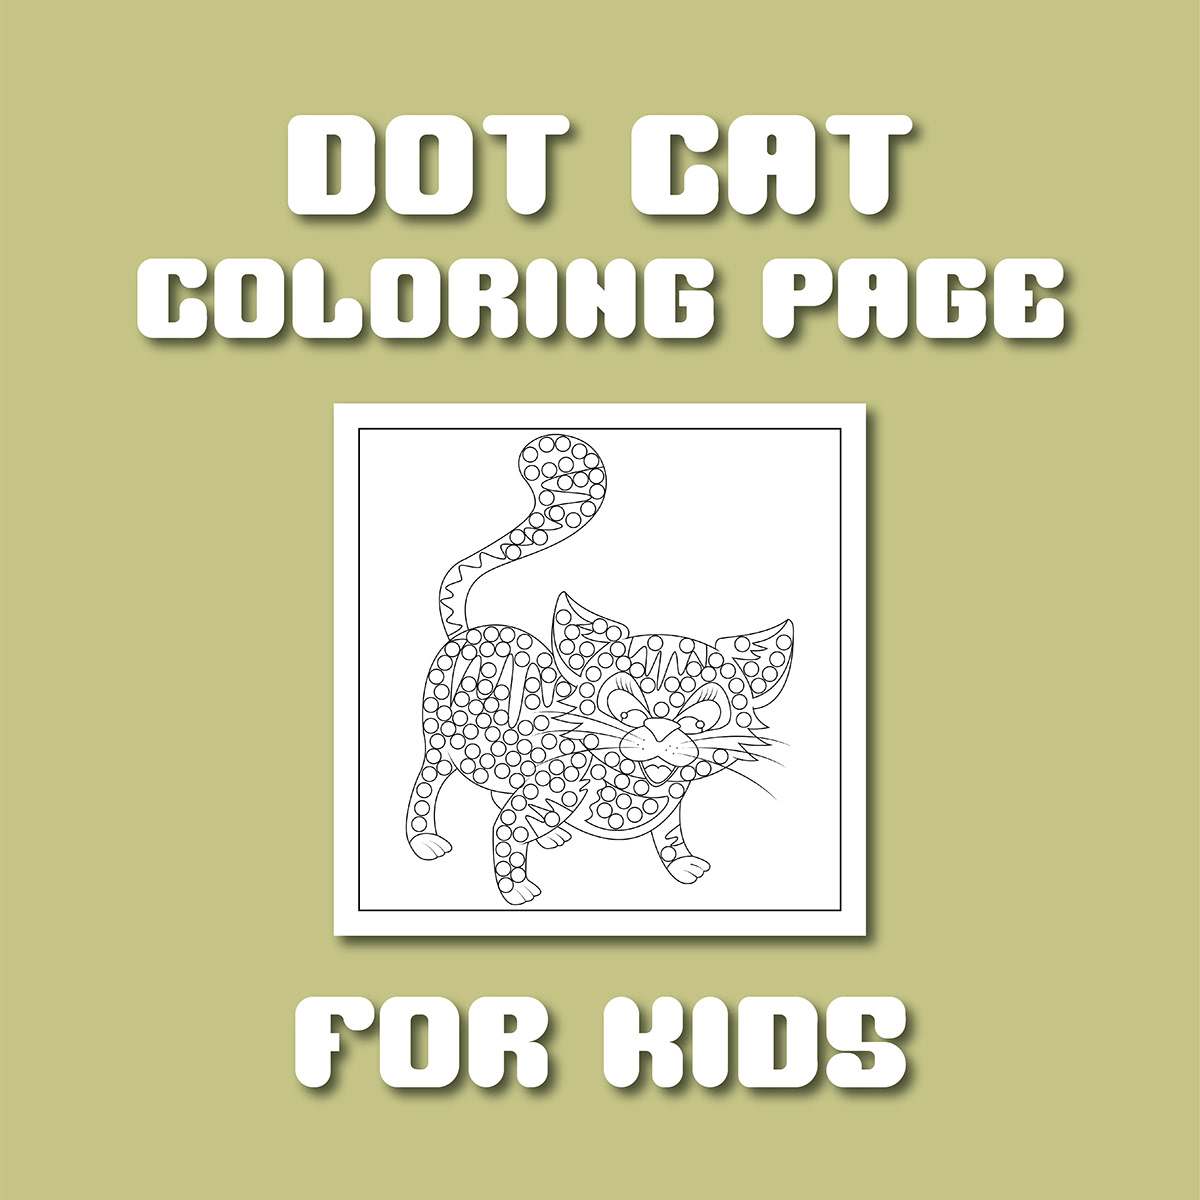 coloring dot dots Cat adobe illustrator Graphic Designer coloringbook coloringpages Dotcat DOTTODOT